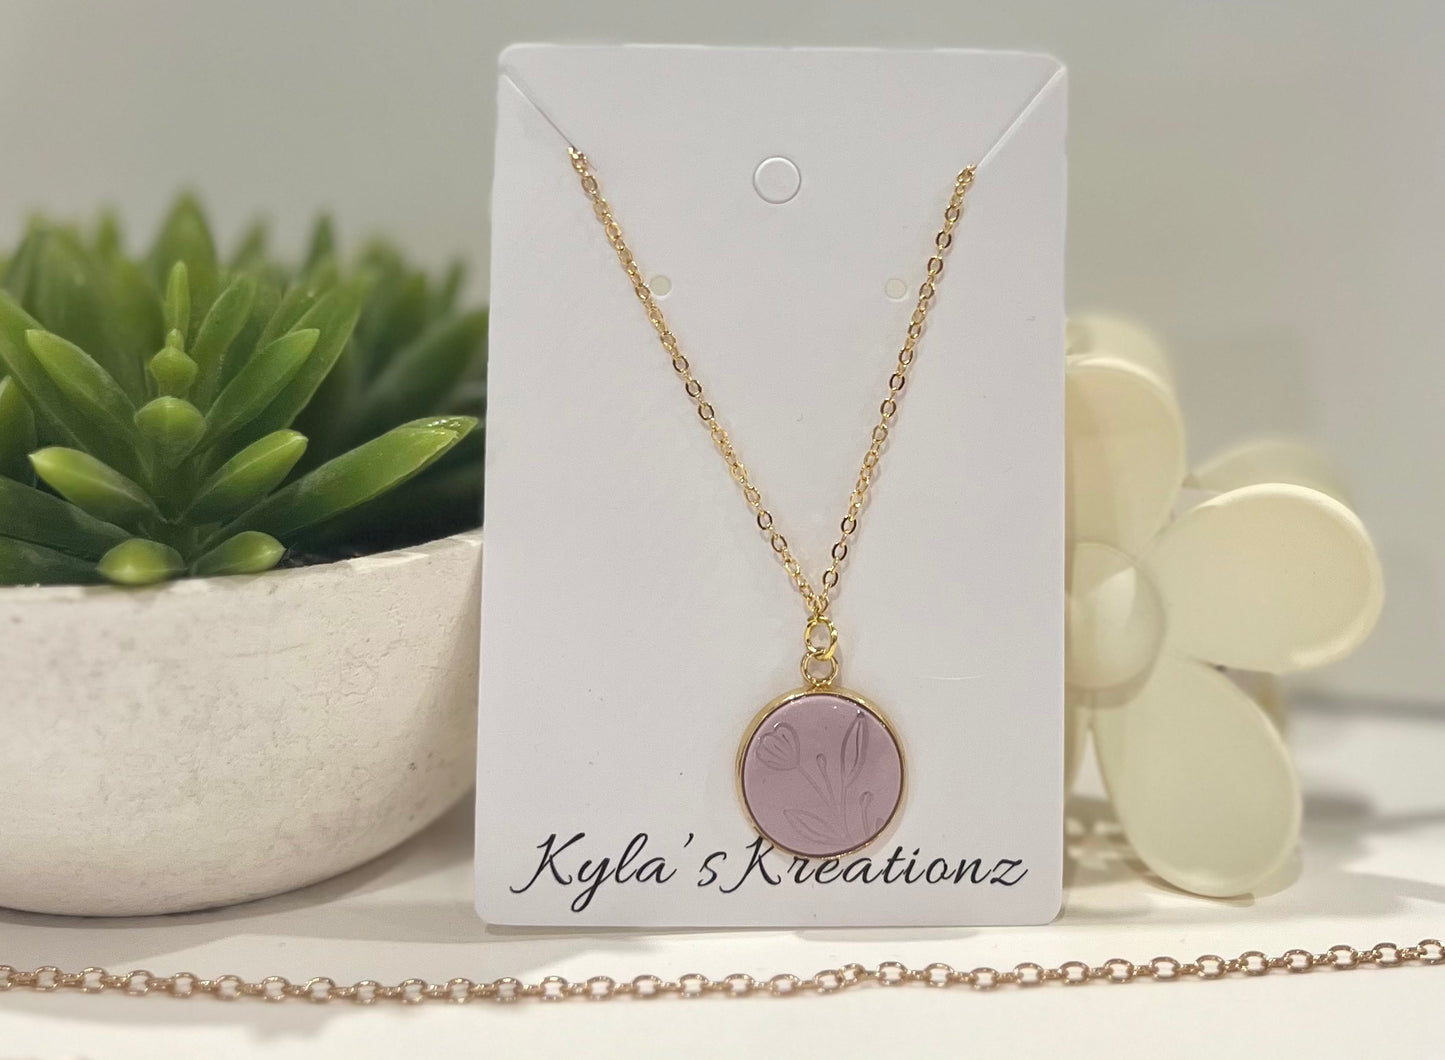 Kyla's Necklaces